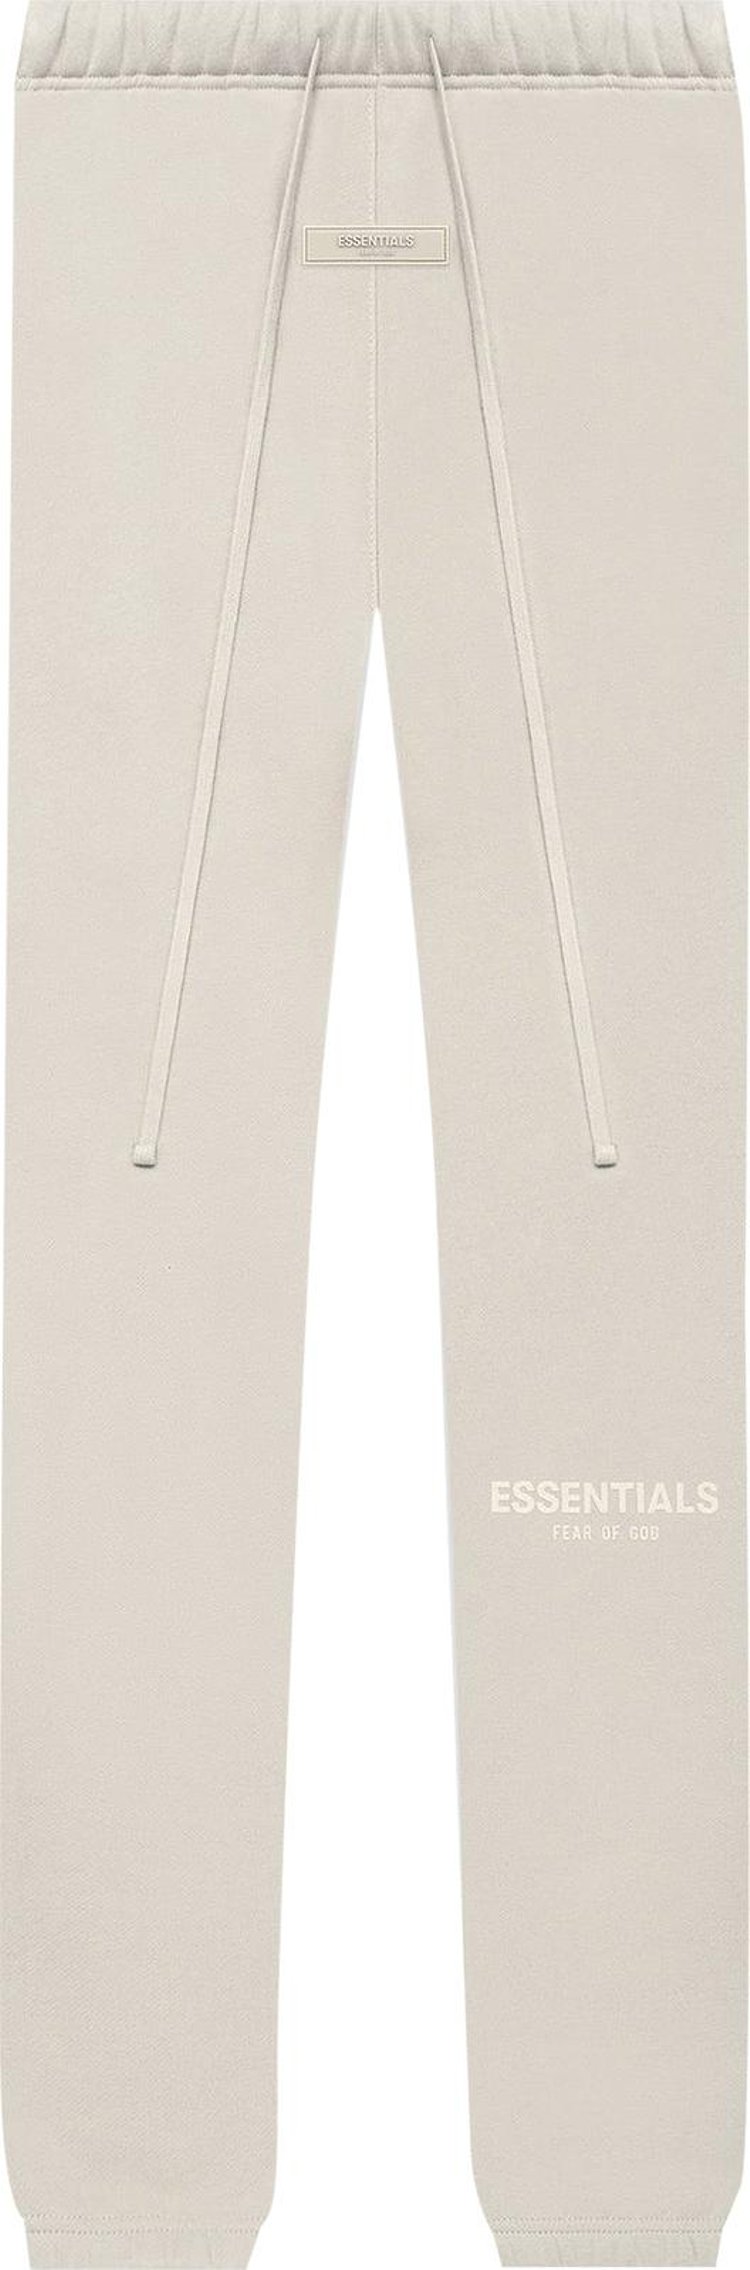 Buy Fear of God Essentials Essentials Sweatpants 'Wheat' - 130BT212027F